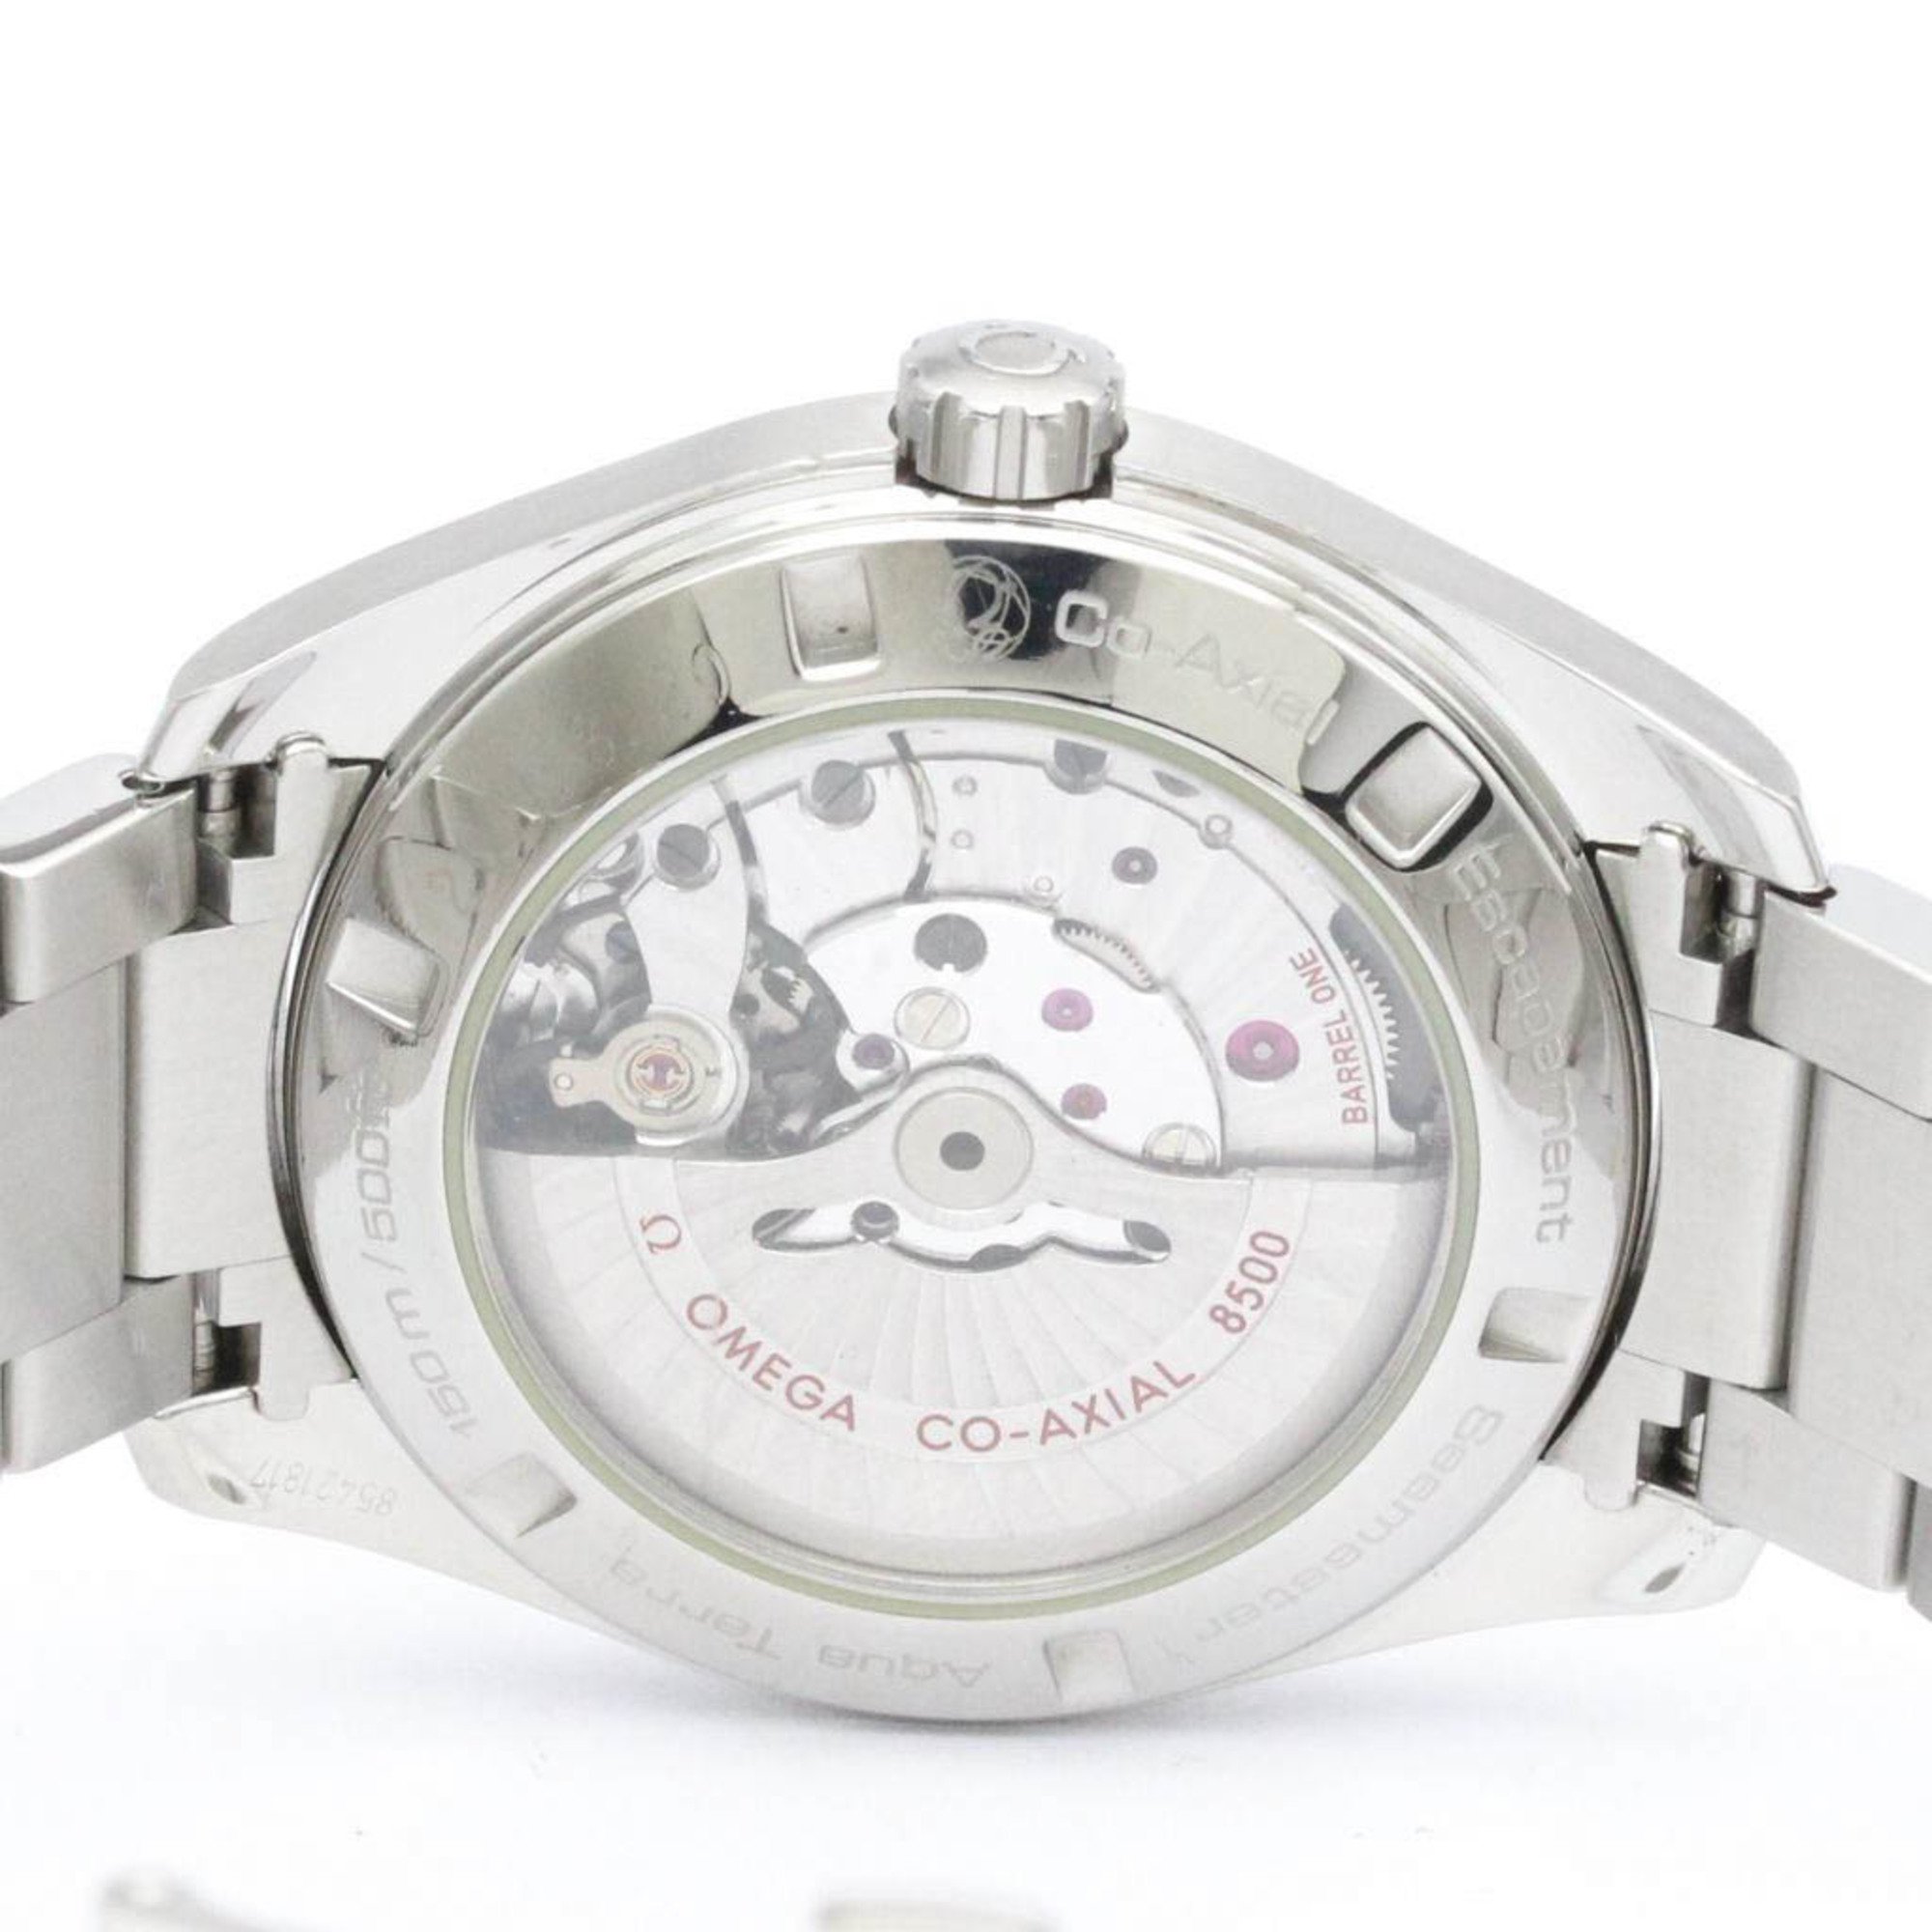 Polished OMEGA Seamaster Aqua Terra Co-Axial Watch 231.10.42.21.06.001 BF559383